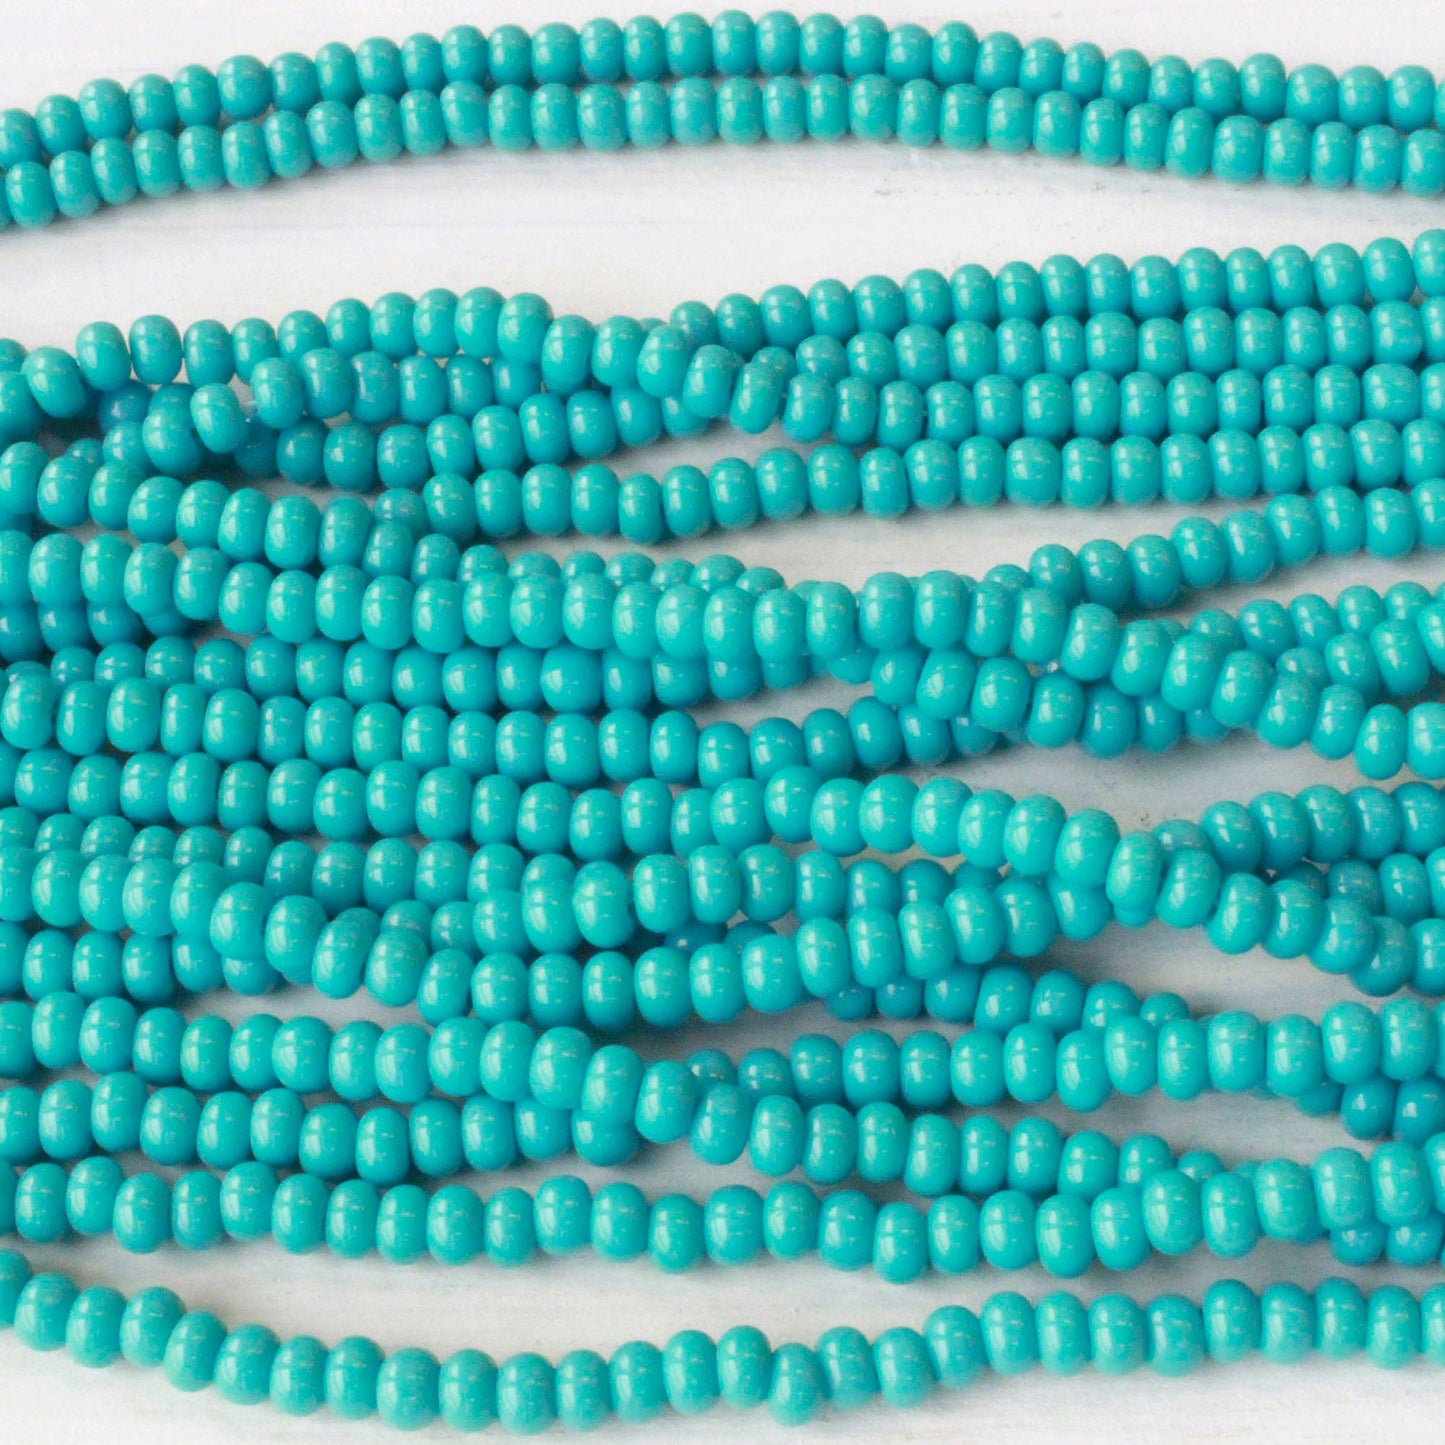 Size 6 Seed Beads - Turquoise - Choose Amount